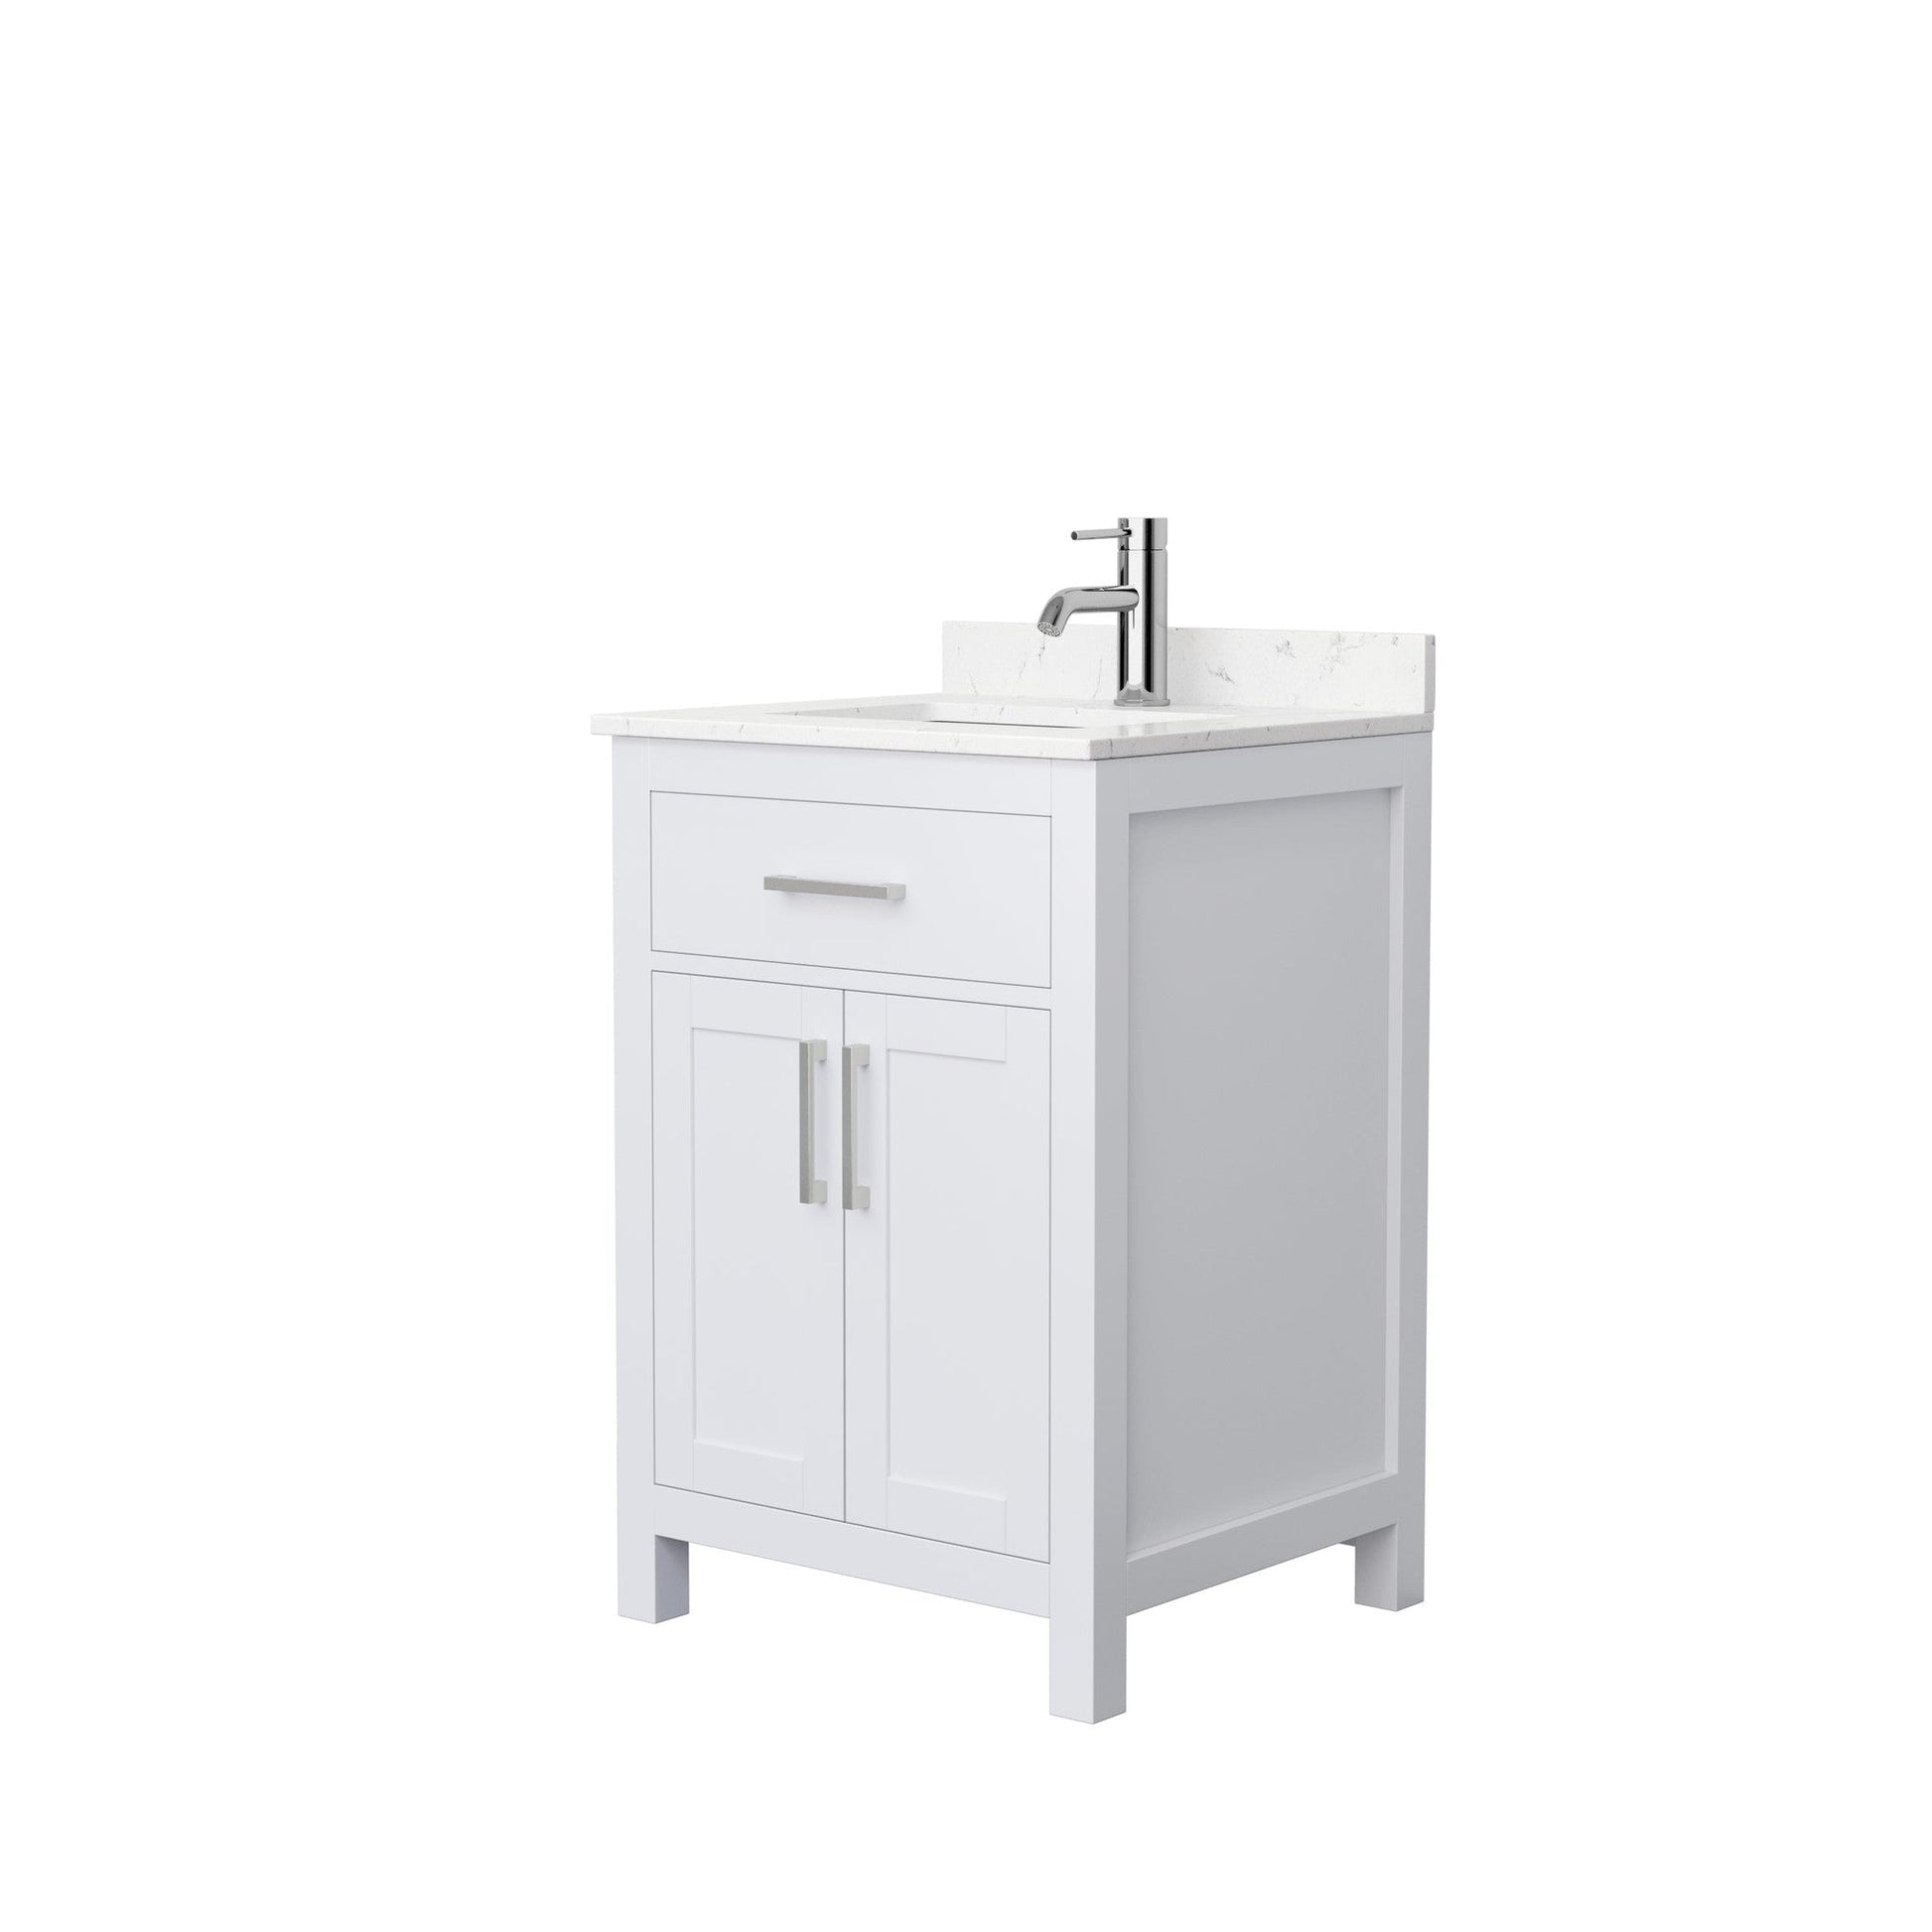 Beckett 24" Single Bathroom Vanity in White, Carrara Cultured Marble Countertop, Undermount Square Sink, Brushed Nickel Trim